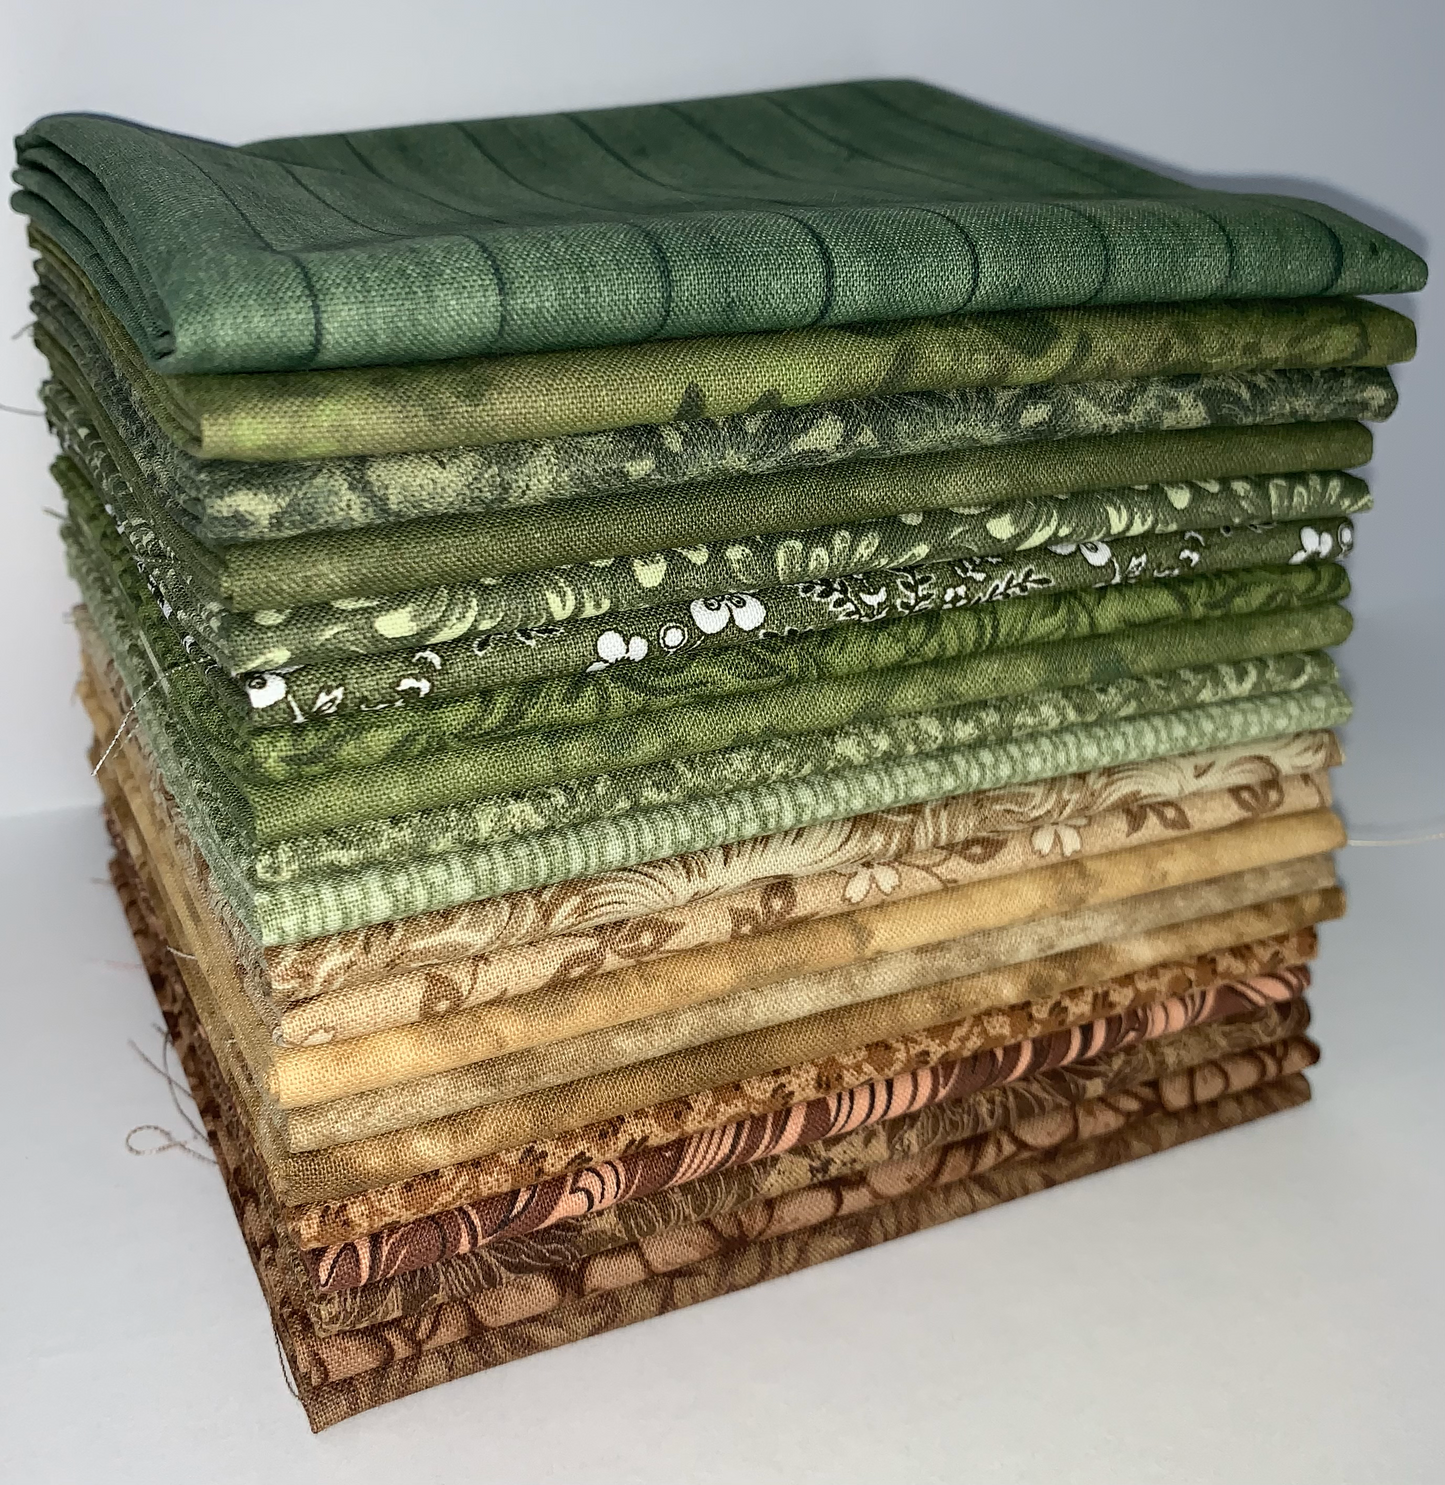 Leaves & Bark Fat Quarter Bundle - 20 Fabrics, 20 Total Fat Quarters